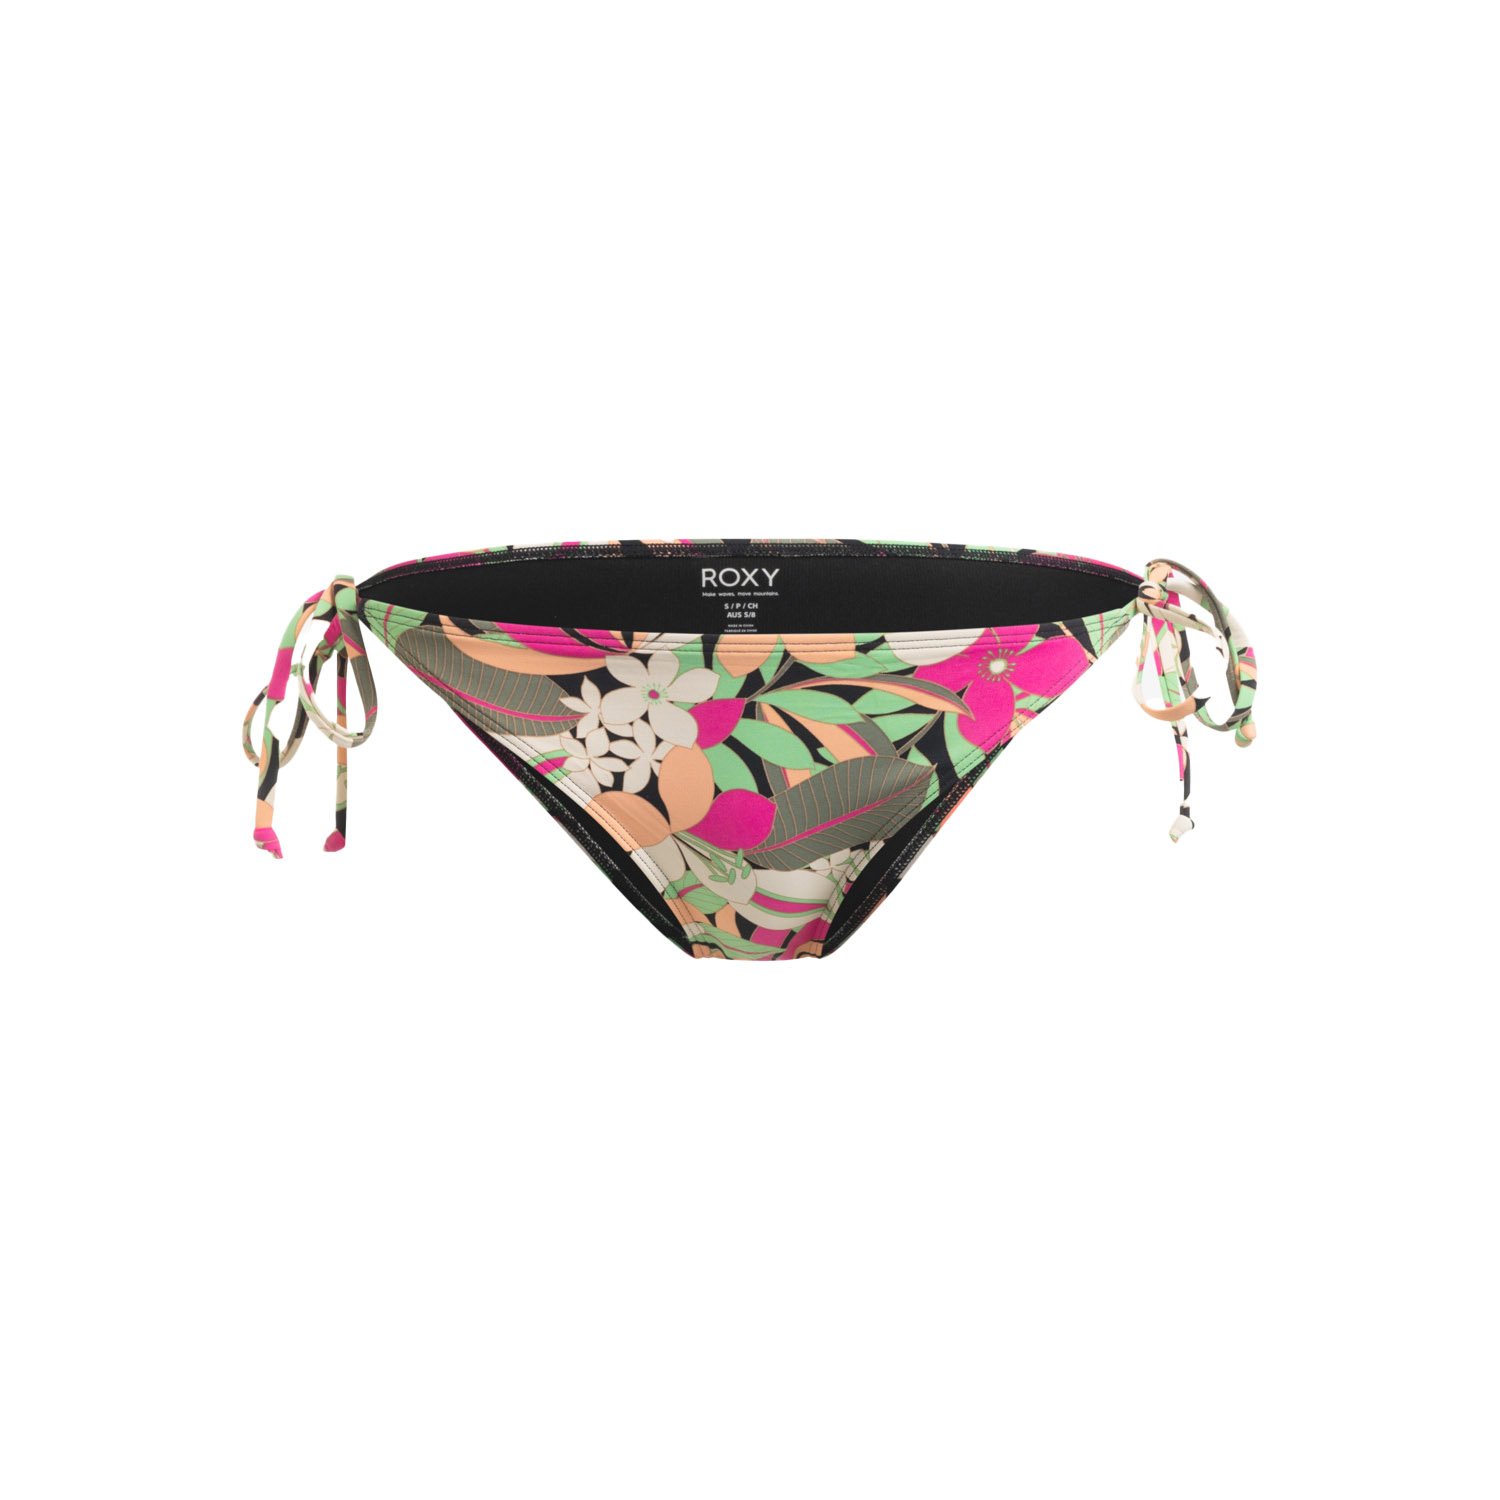 Roxy Printed Beach Classics Kadın Bikini Altı - Renkli - 1